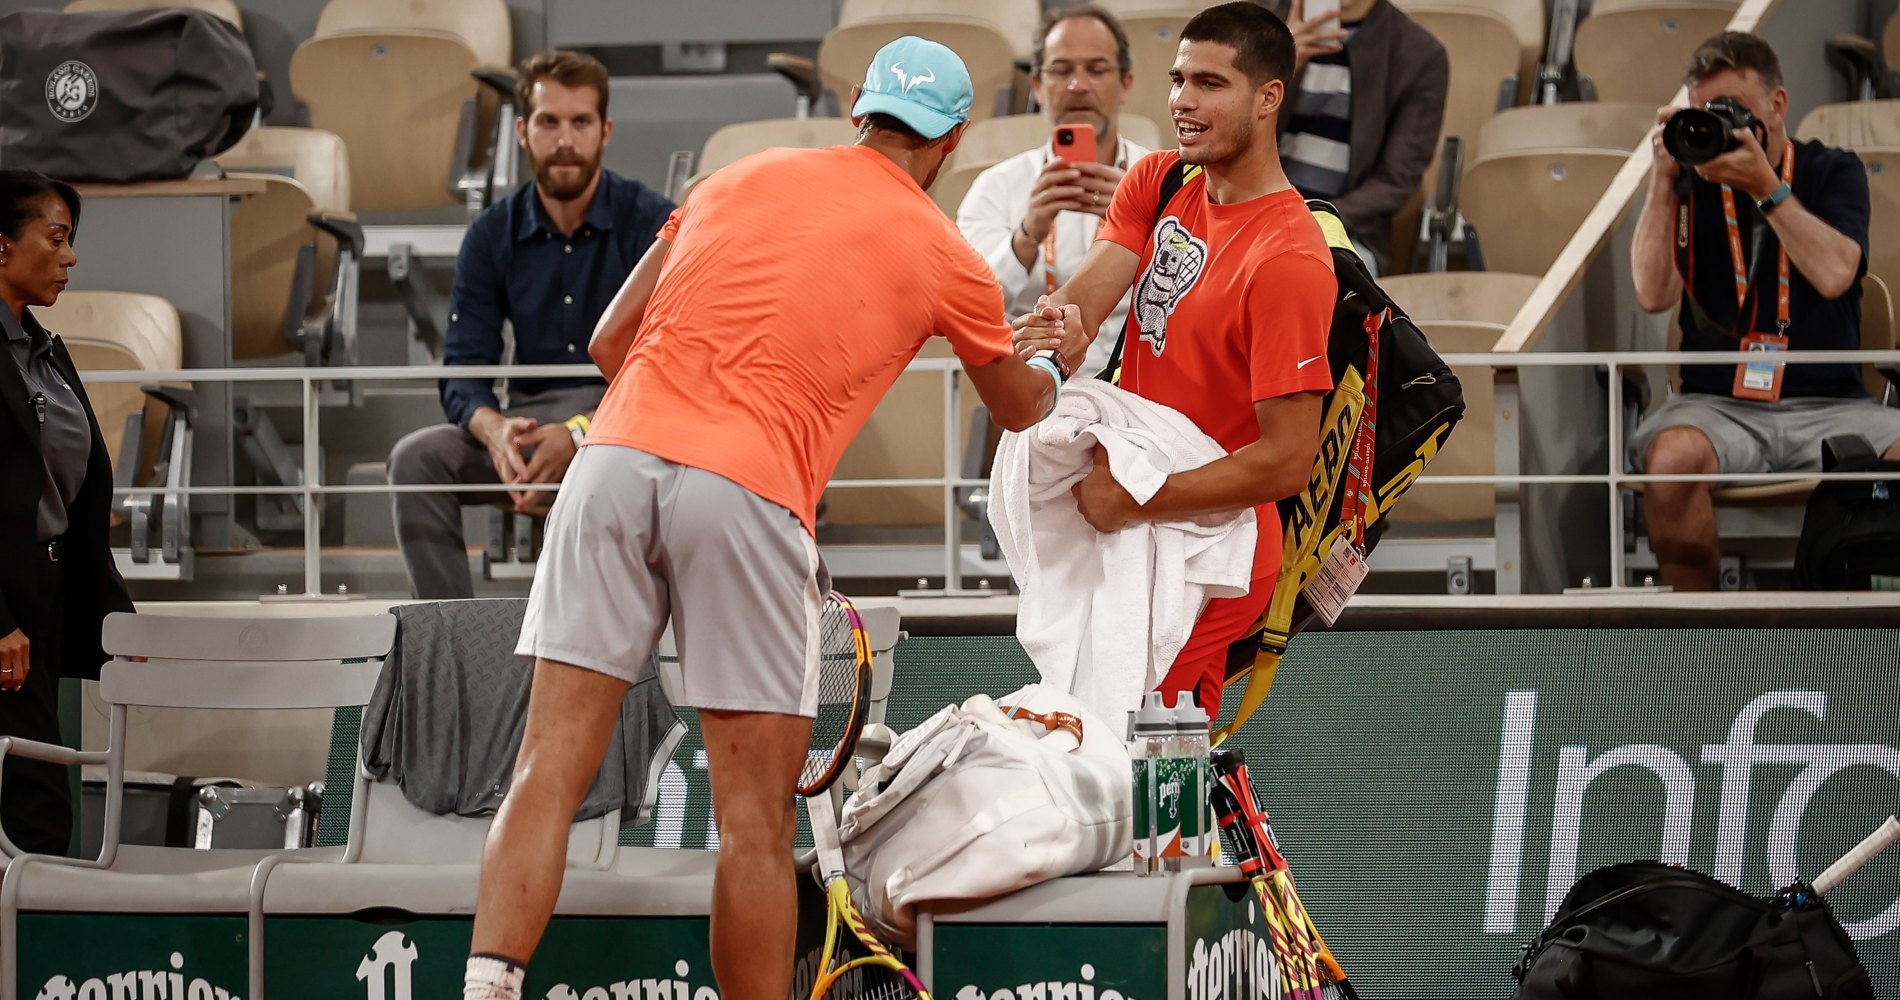 Nadal and Alcaraz RG practice